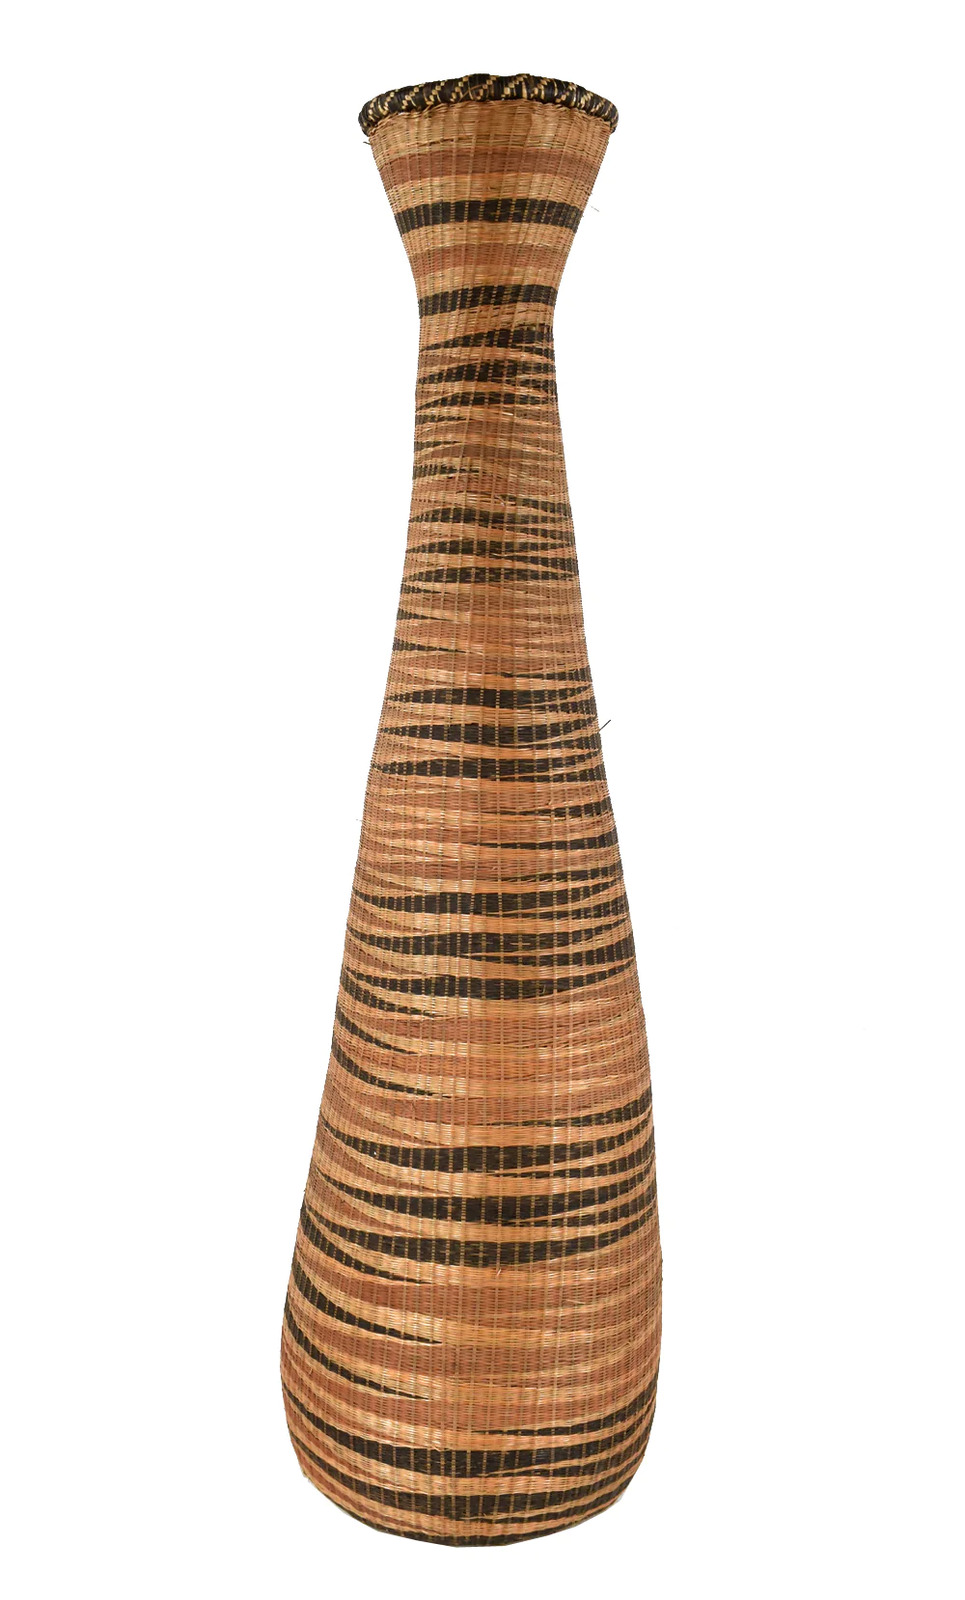 Tutsi Tight Weave Wedding Basket Vase Rwanda 31 Inch